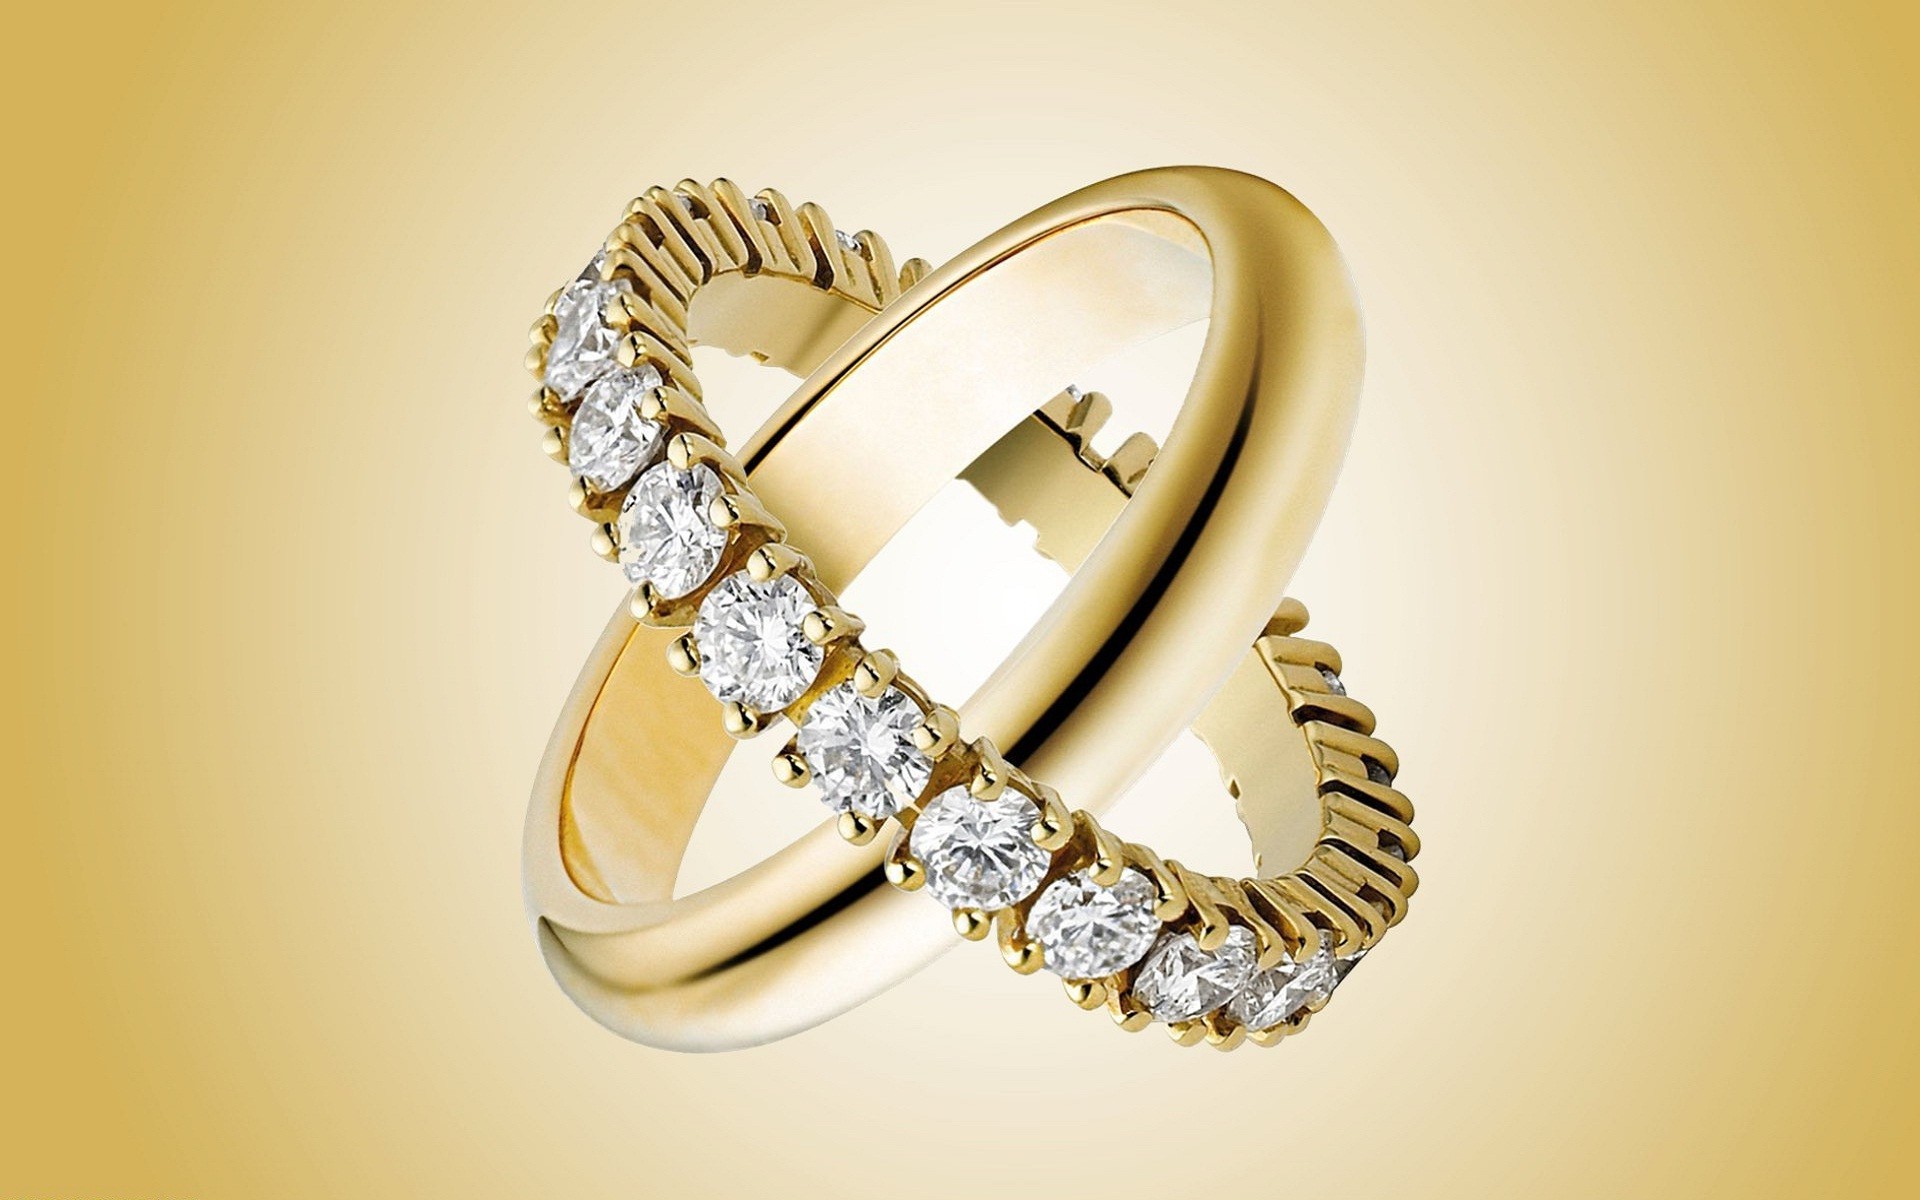 1920x1200 Jewelry designing new pattern wedding ring